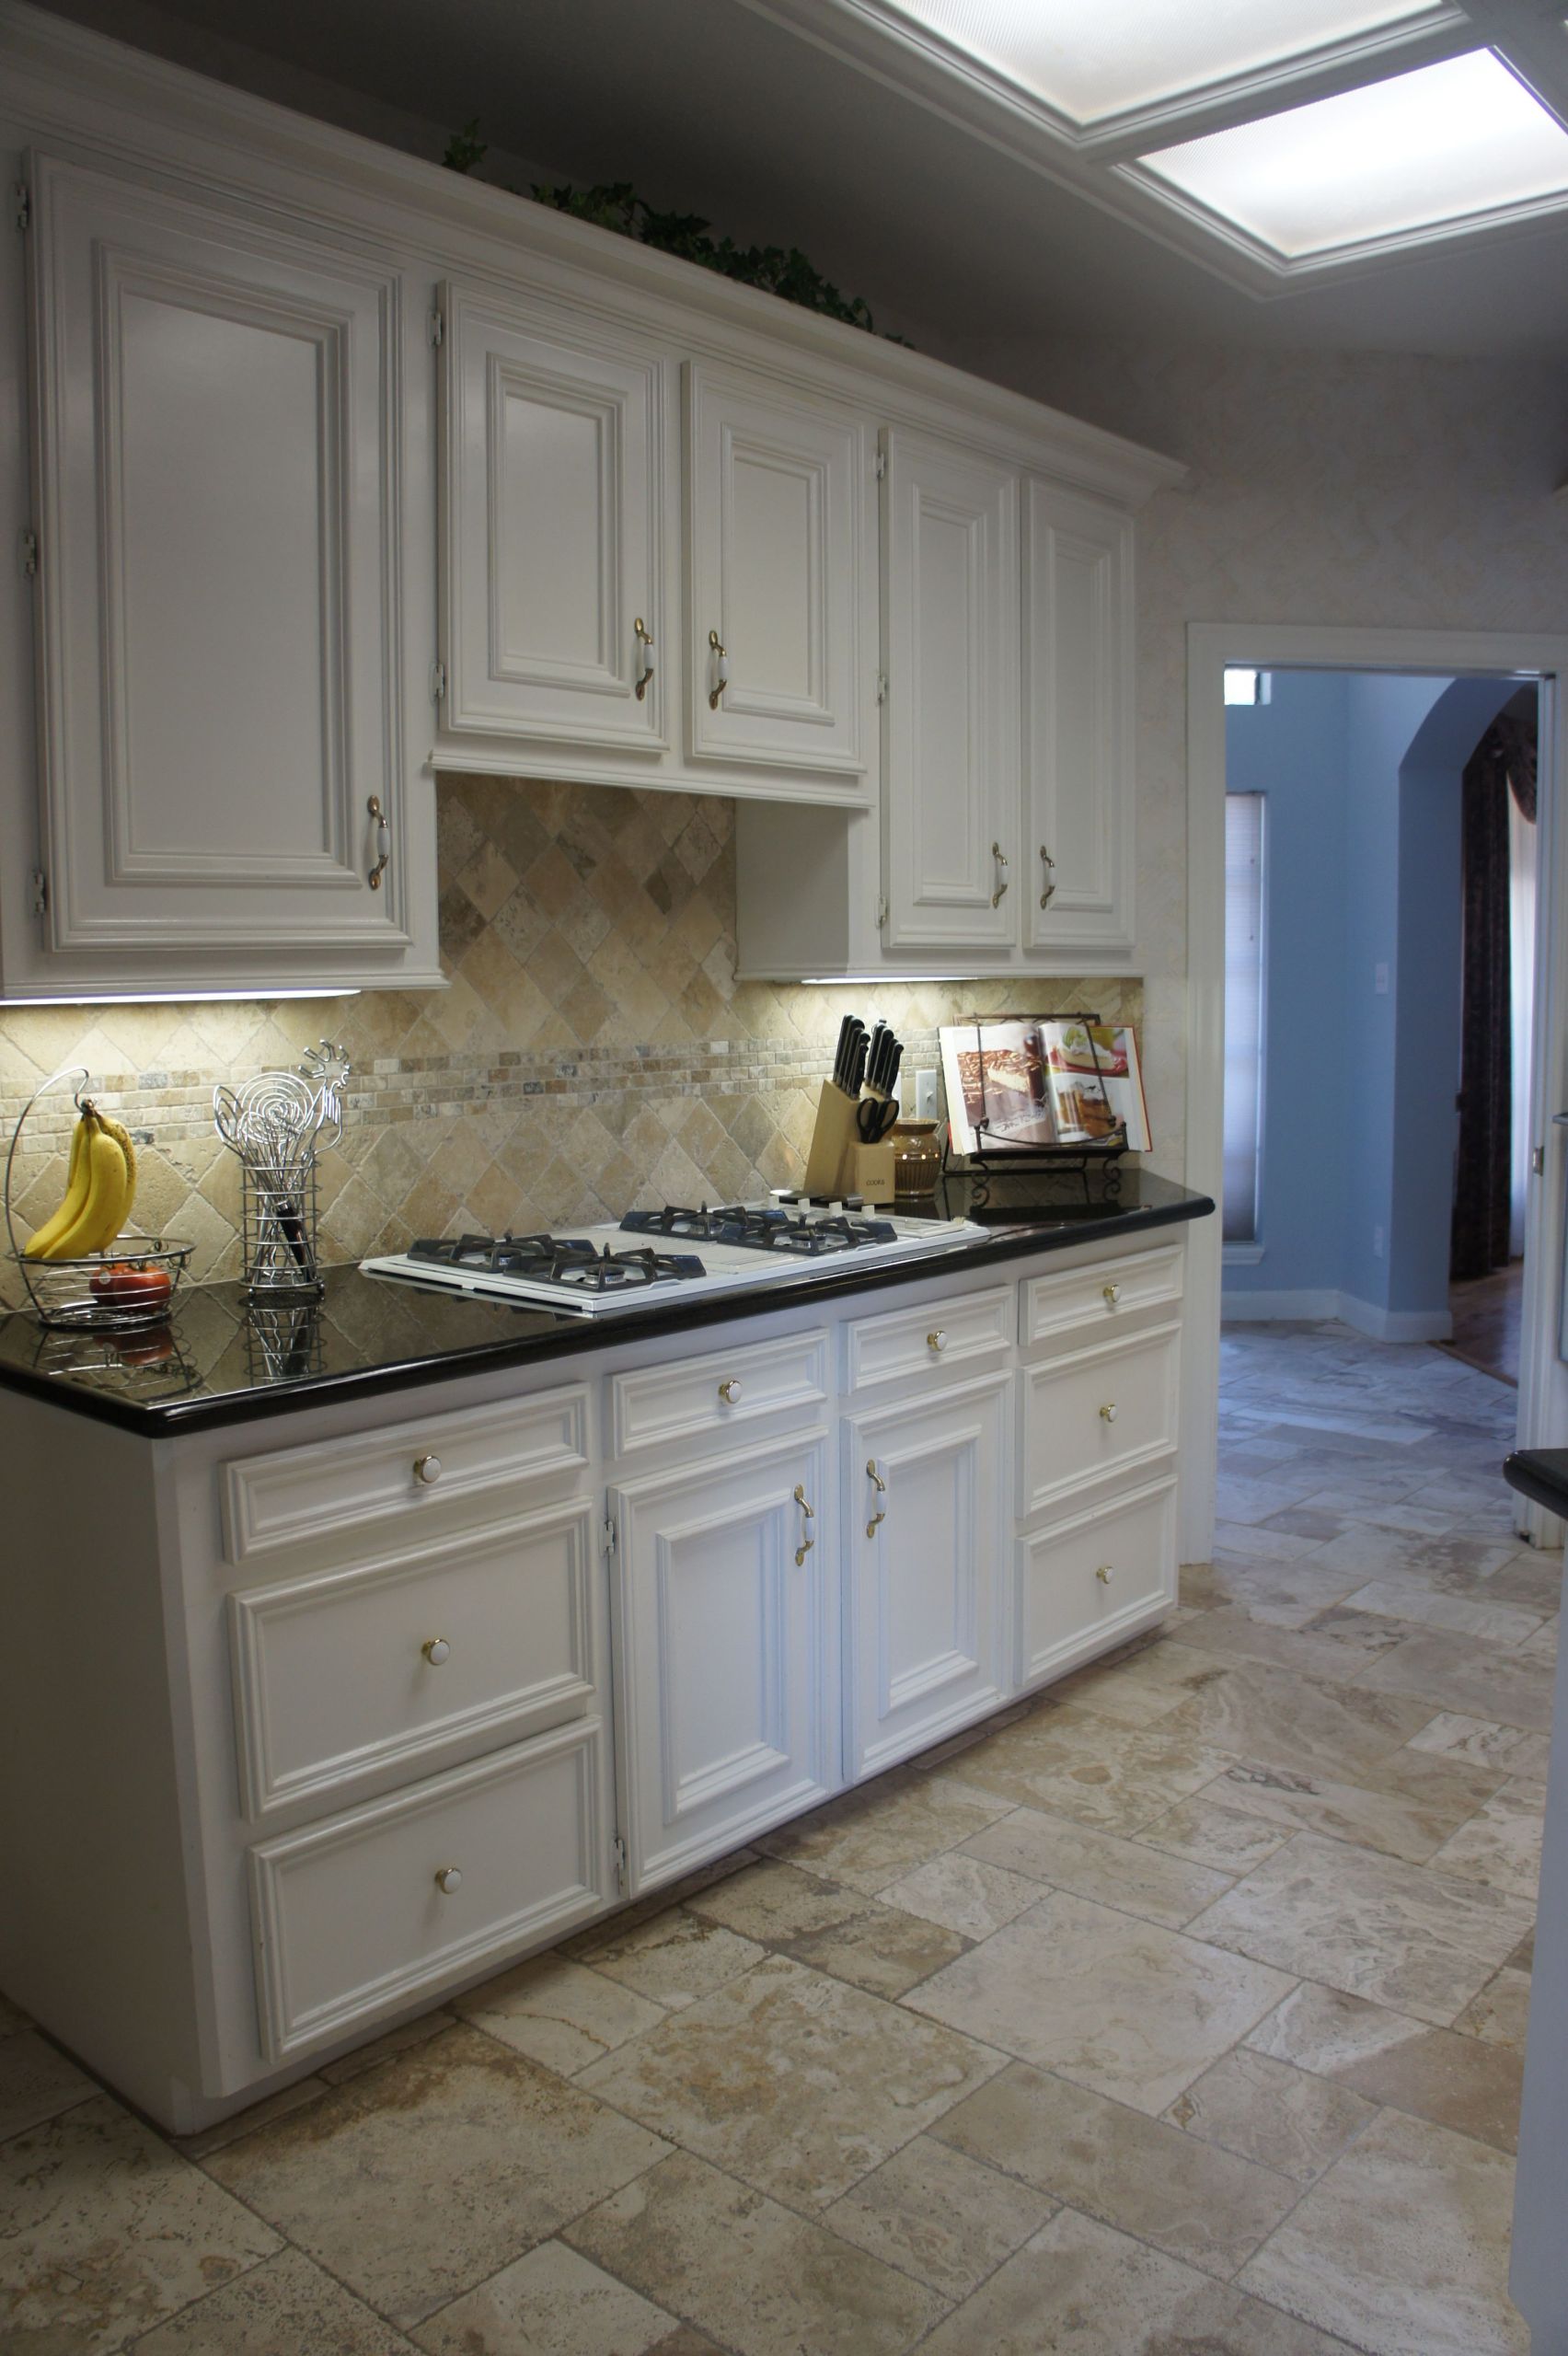 Floor And Decor Kitchen Backsplash
 Travertine Tile color Tiramisu Flooring and Backsplash for